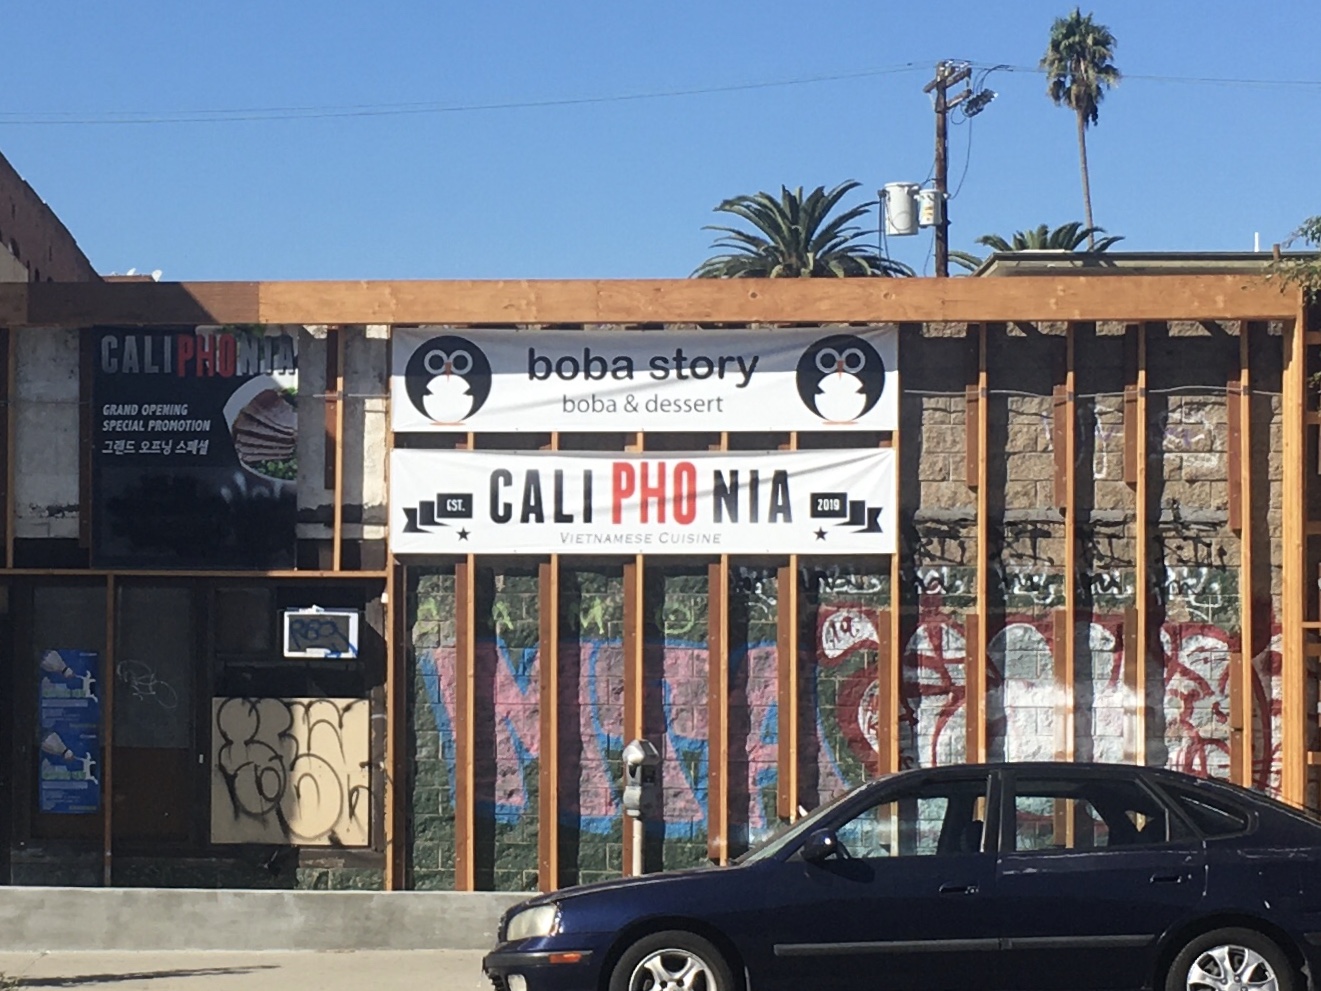 Cali Pho Nia restaurant in Koreatown LA